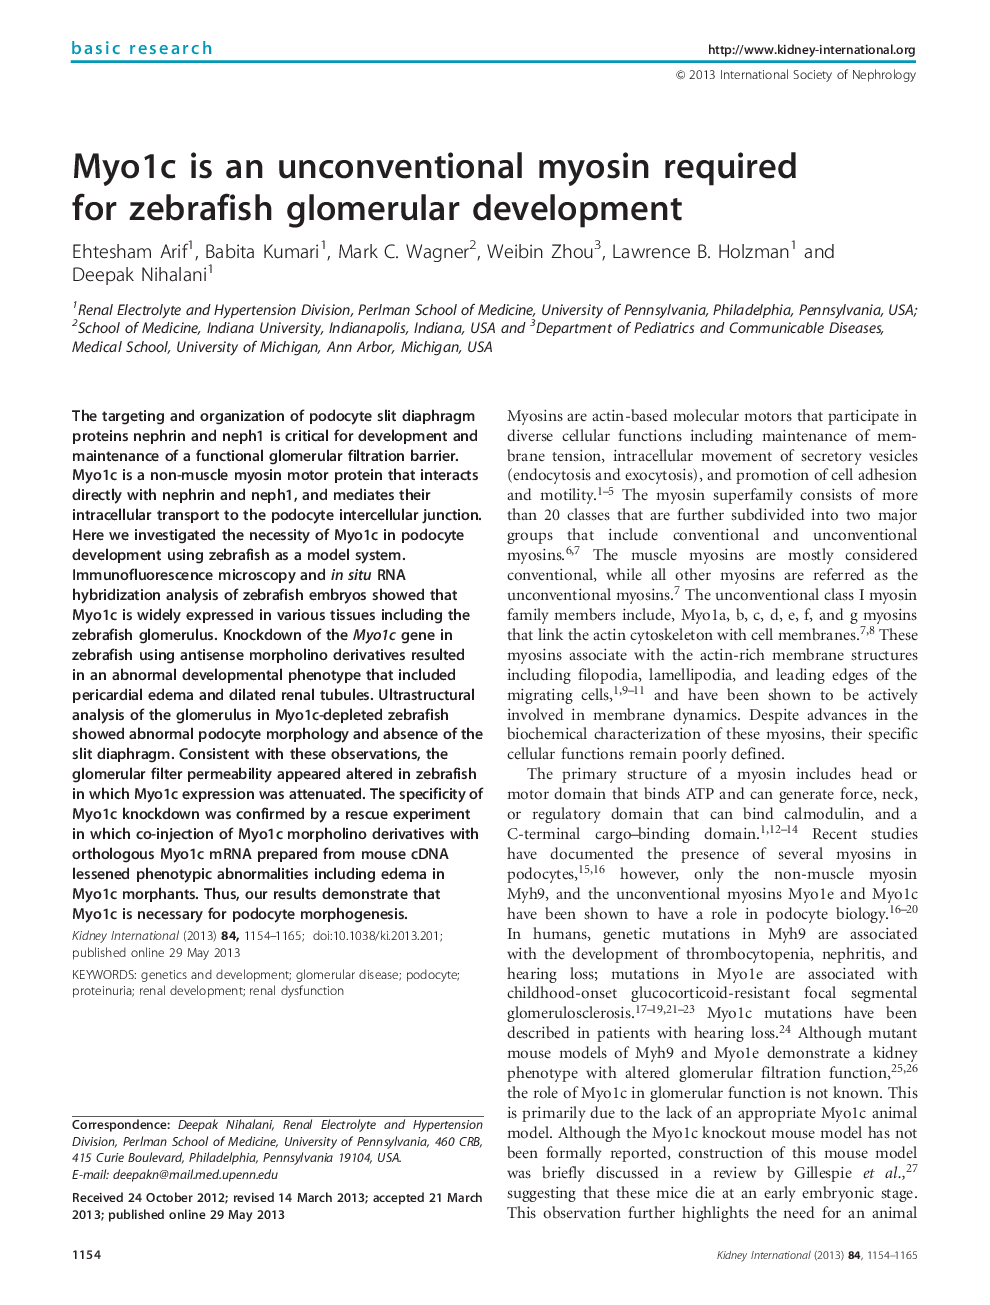 Myo1c is an unconventional myosin required for zebrafish glomerular development